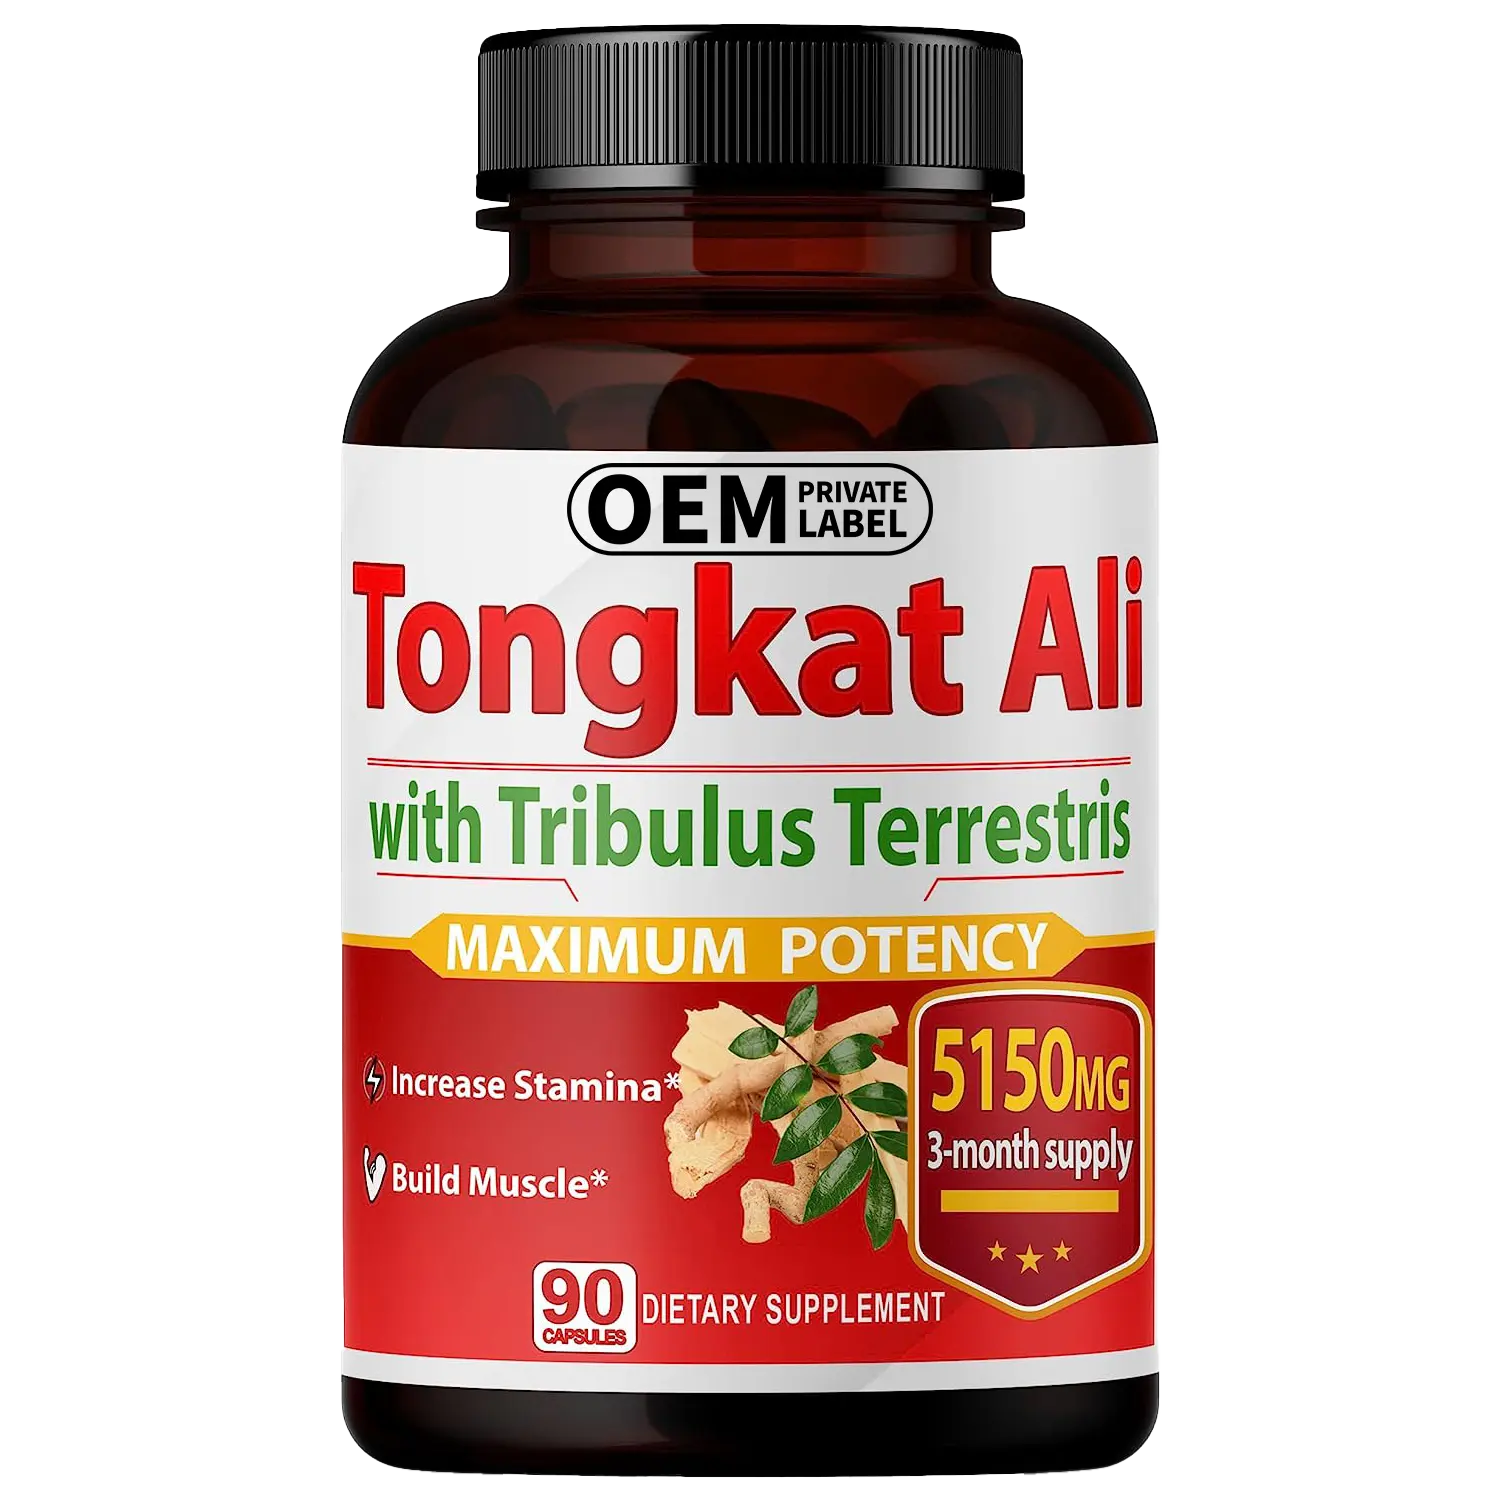 OEM Tongkat Ali Capsules with Tribulus Terrestris Maximum Potency 5150 mg Increase Stamina & Build Muscle Non-GMO Immune Boost